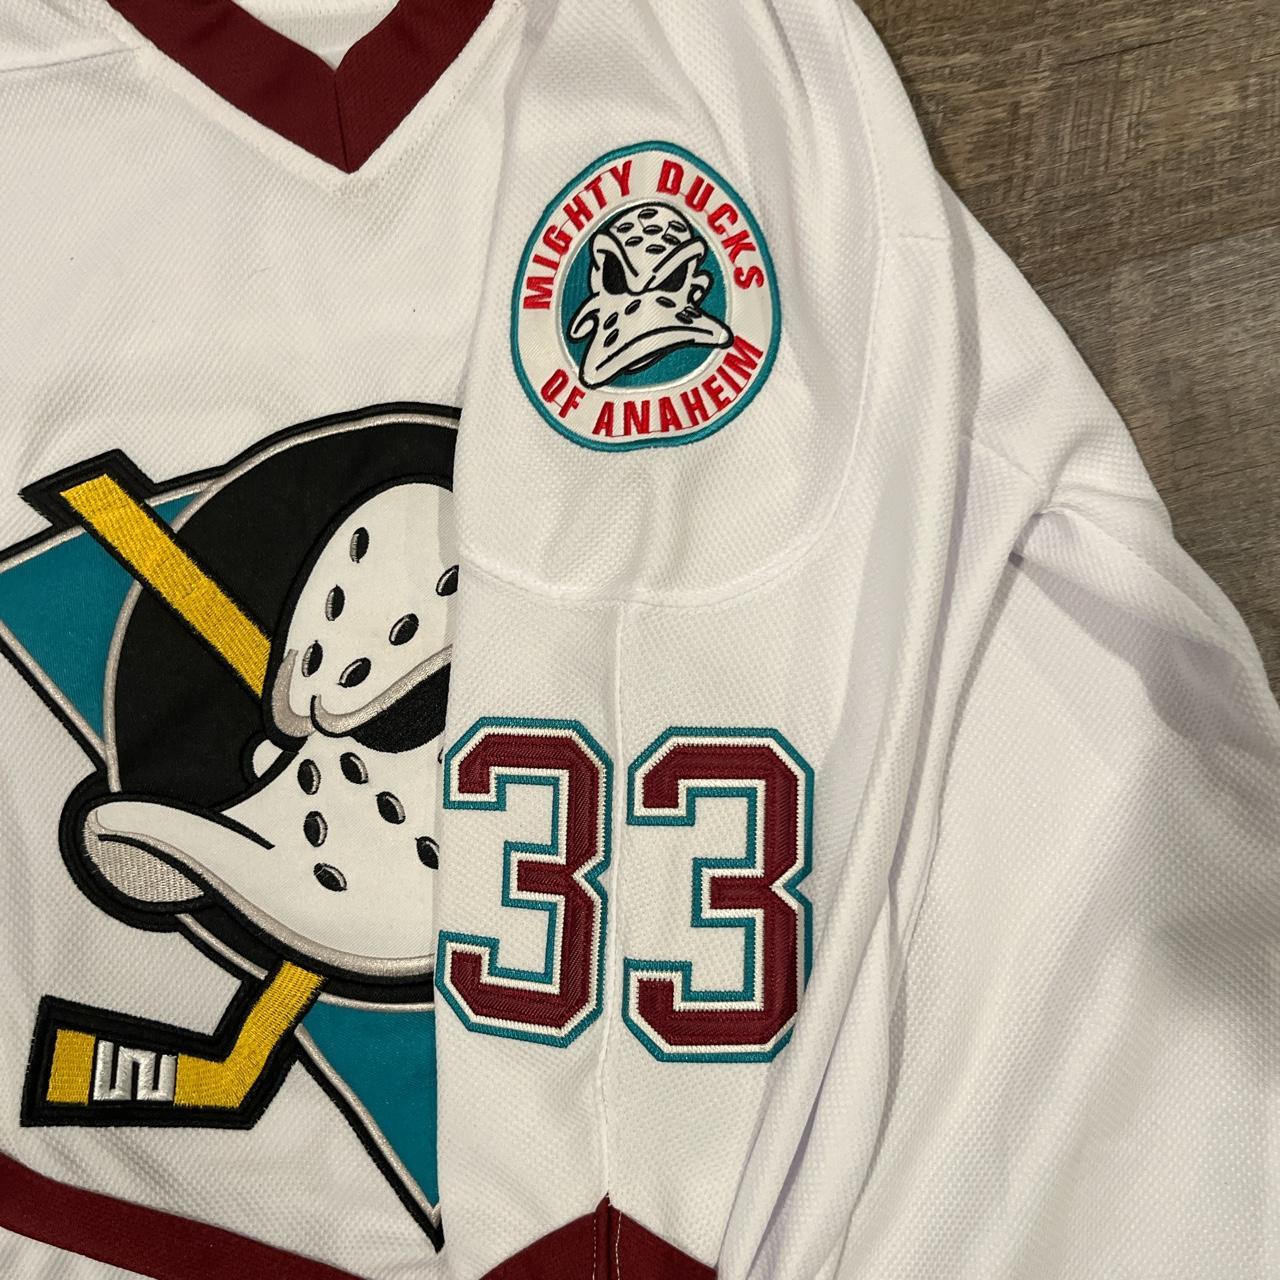 Mighty Ducks Hockey Jersey #33 Goldberg - Depop